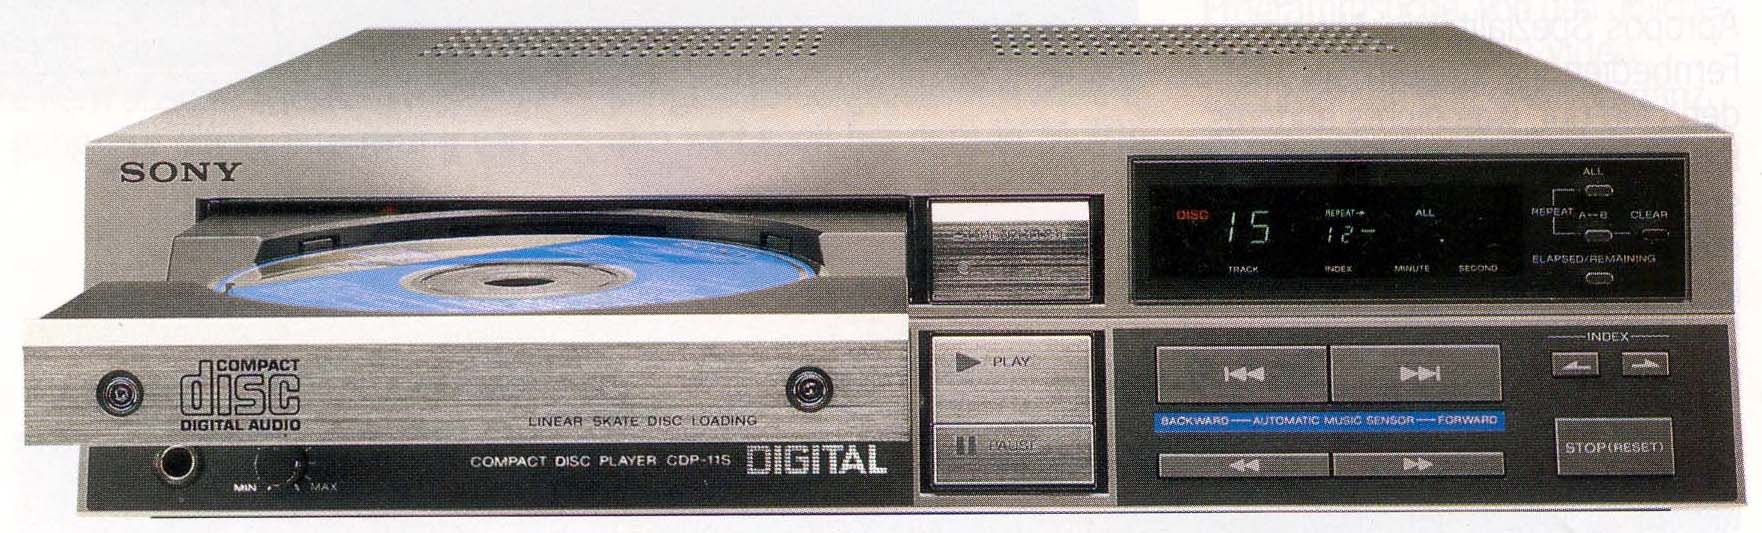 Sony CDP-11S CD Players